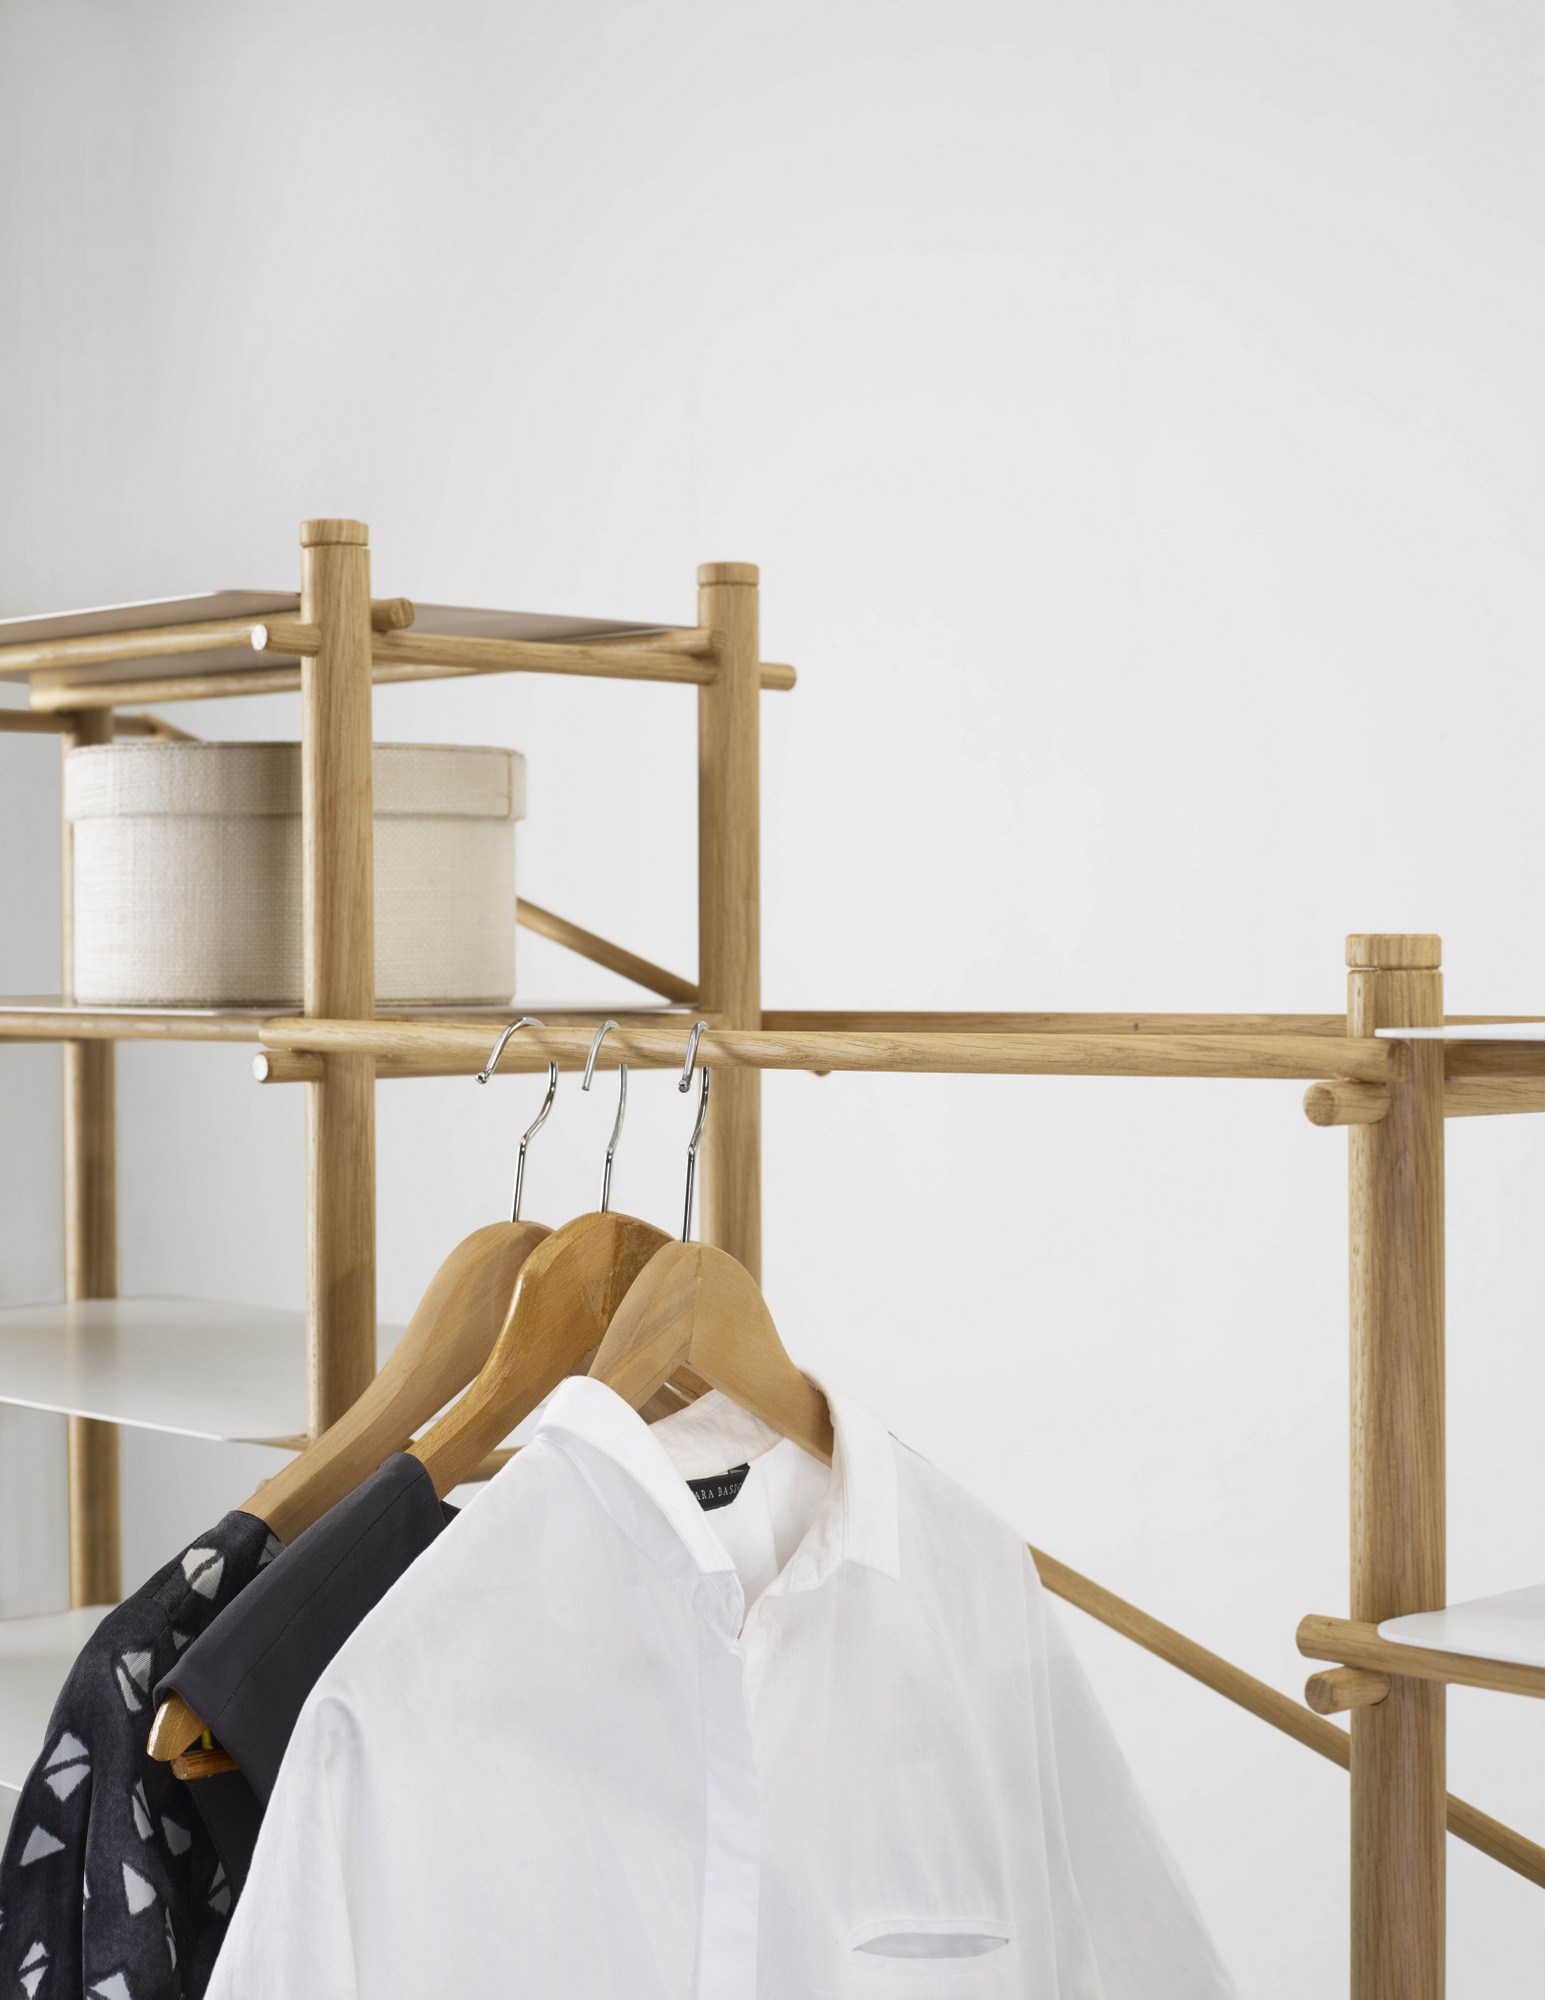 Andamio Shelf by Florian Gross & Kike Macías for EX.T